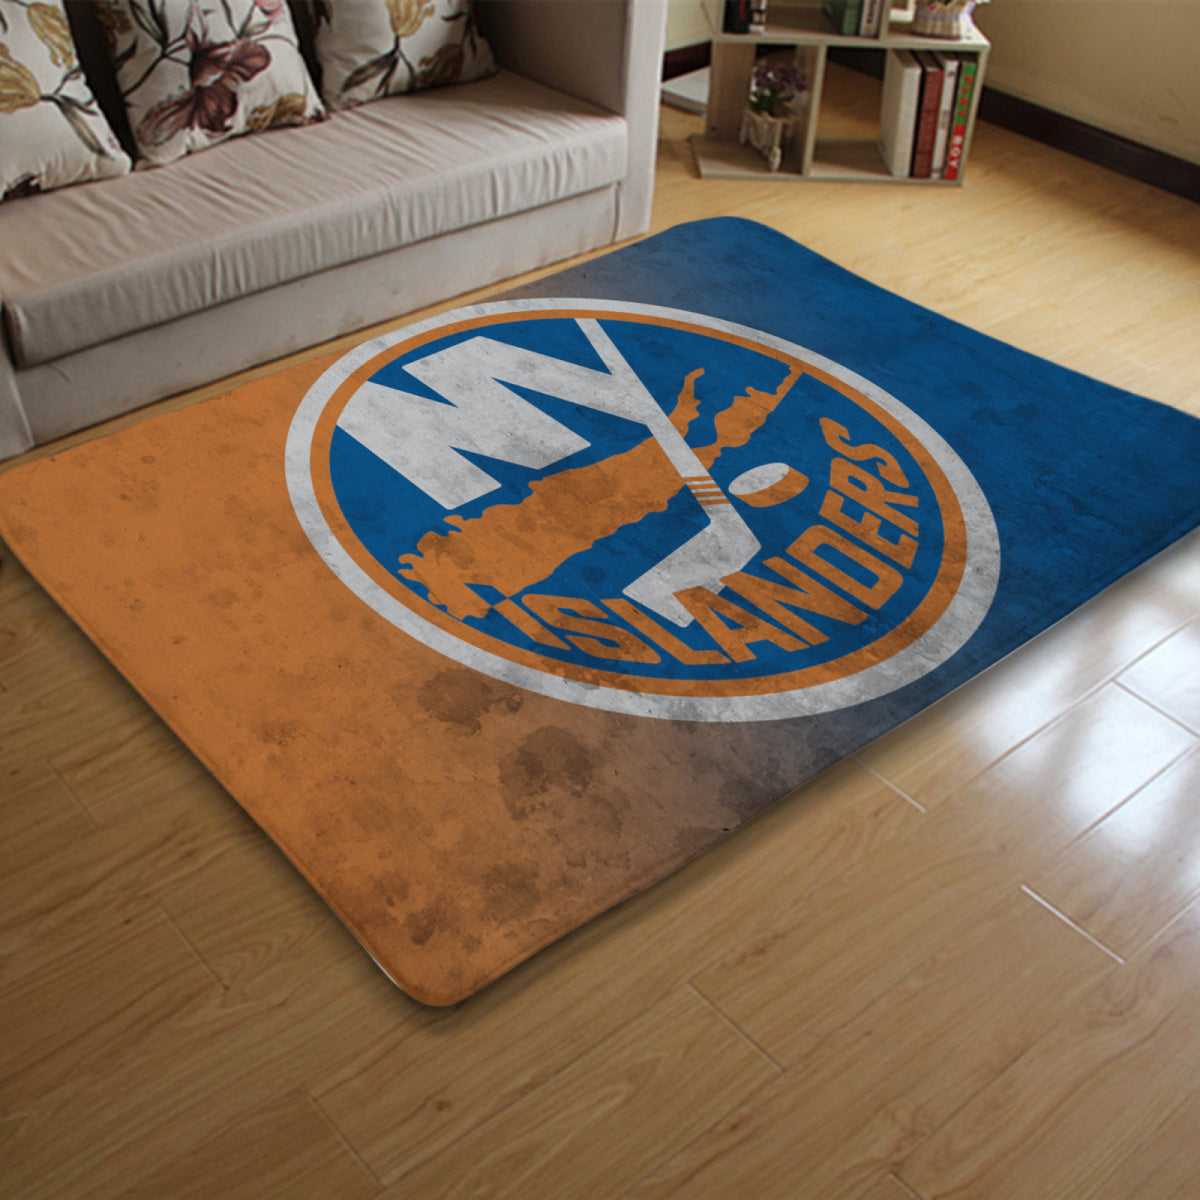 New YorkIslanders Hockey League Carpet Living Room Bedroom Mats Kitchen Bathroom Rugs